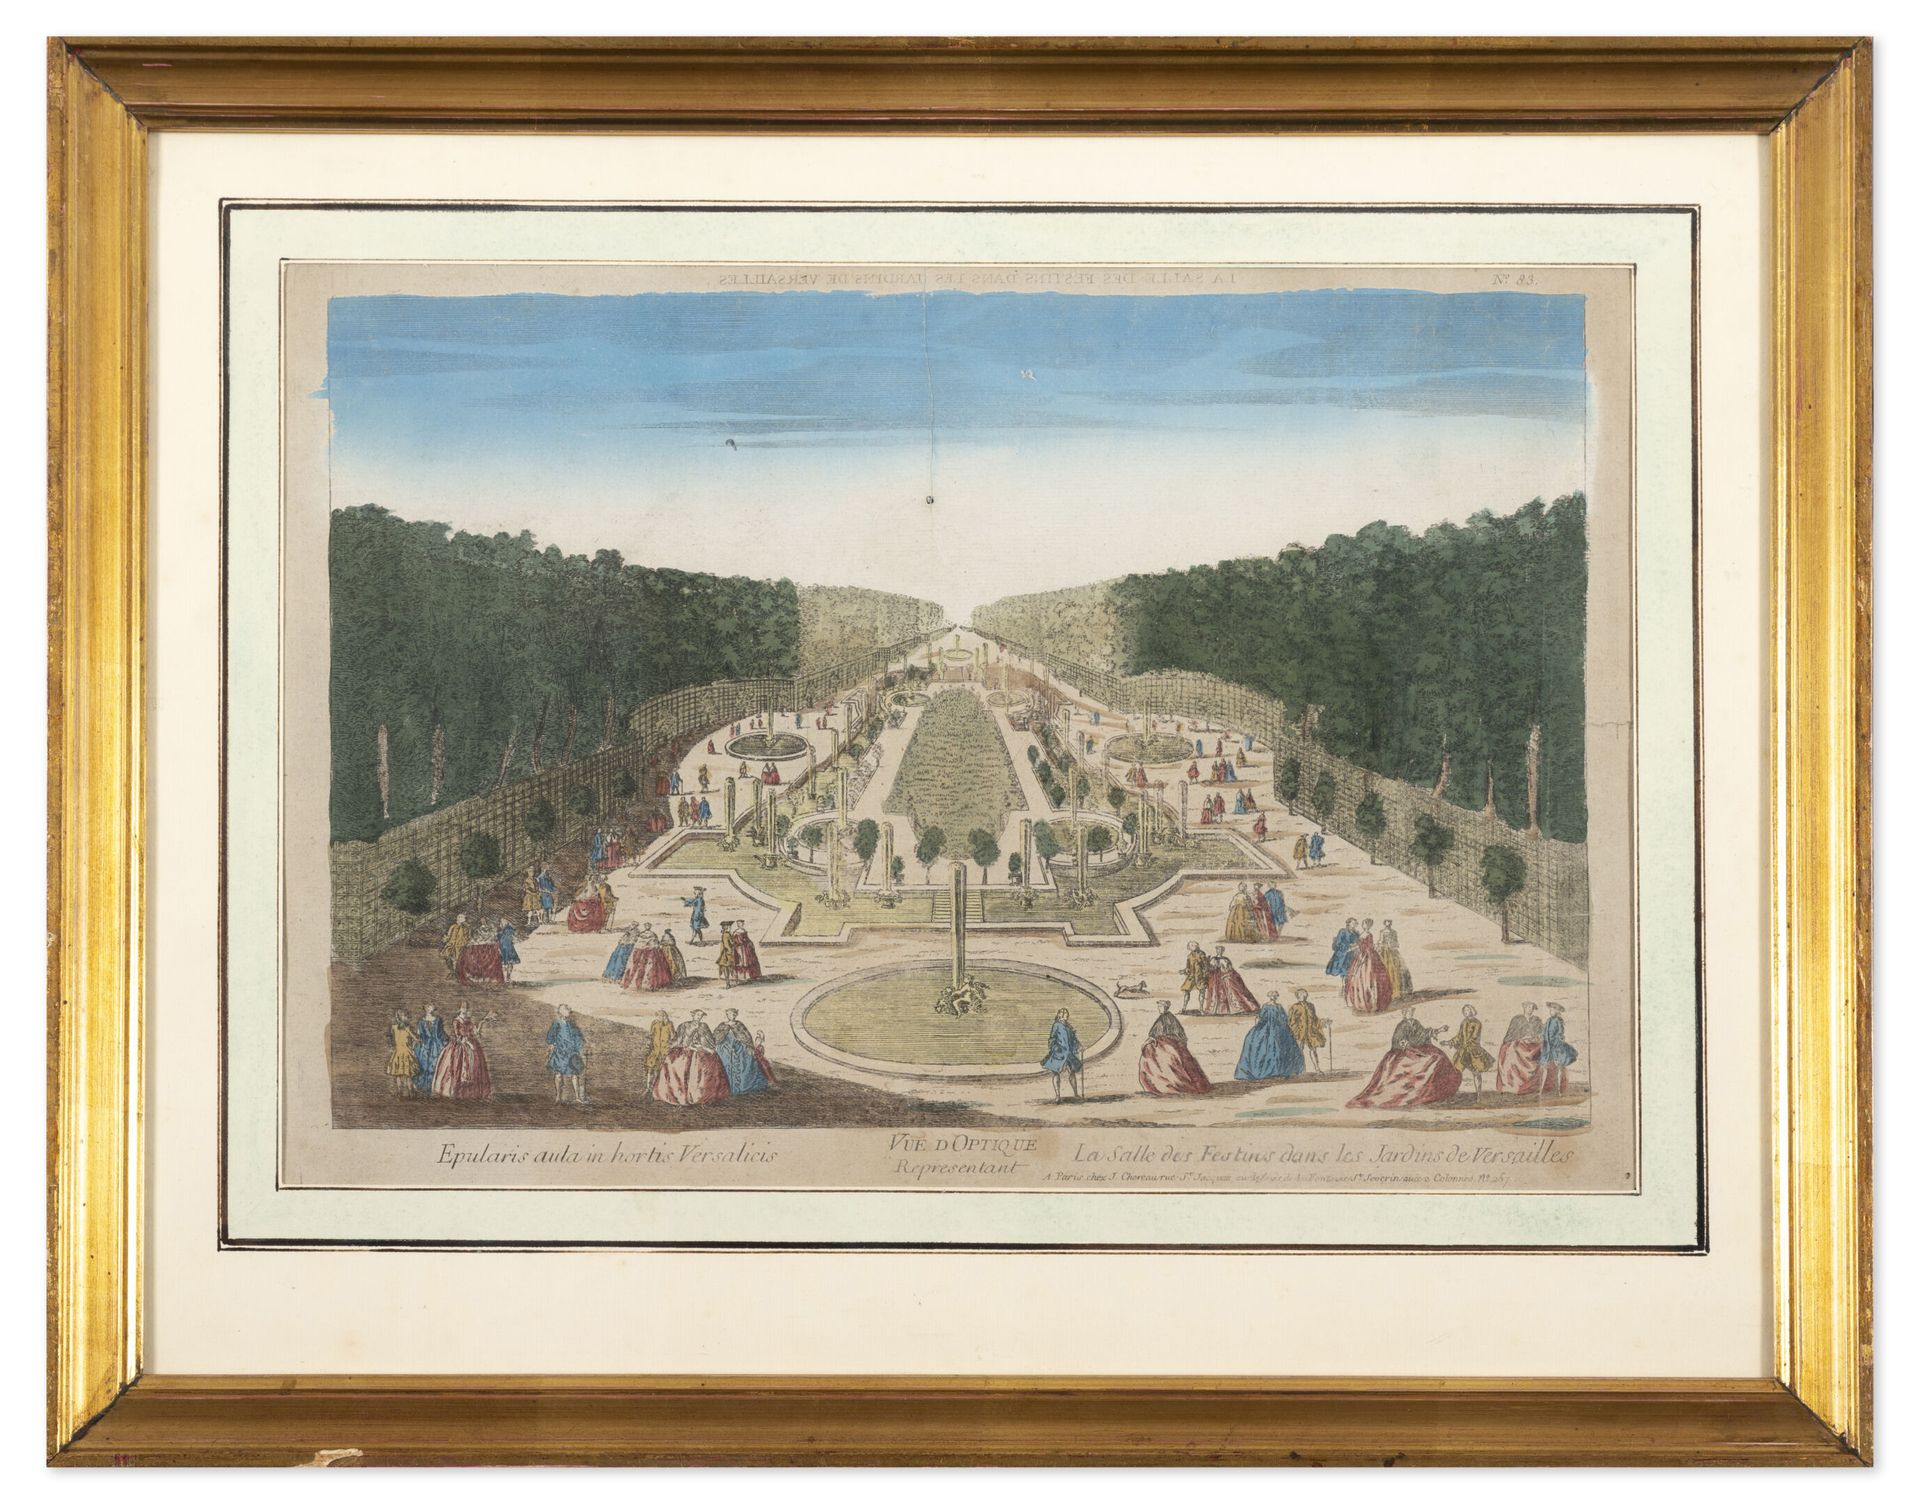 Null 凡尔赛宫花园中的 "节日厅"。

增强的光学视图。

18世纪。

29.30 x 42.8厘米（见图）。

隔离。褶皱，破损。

带框。